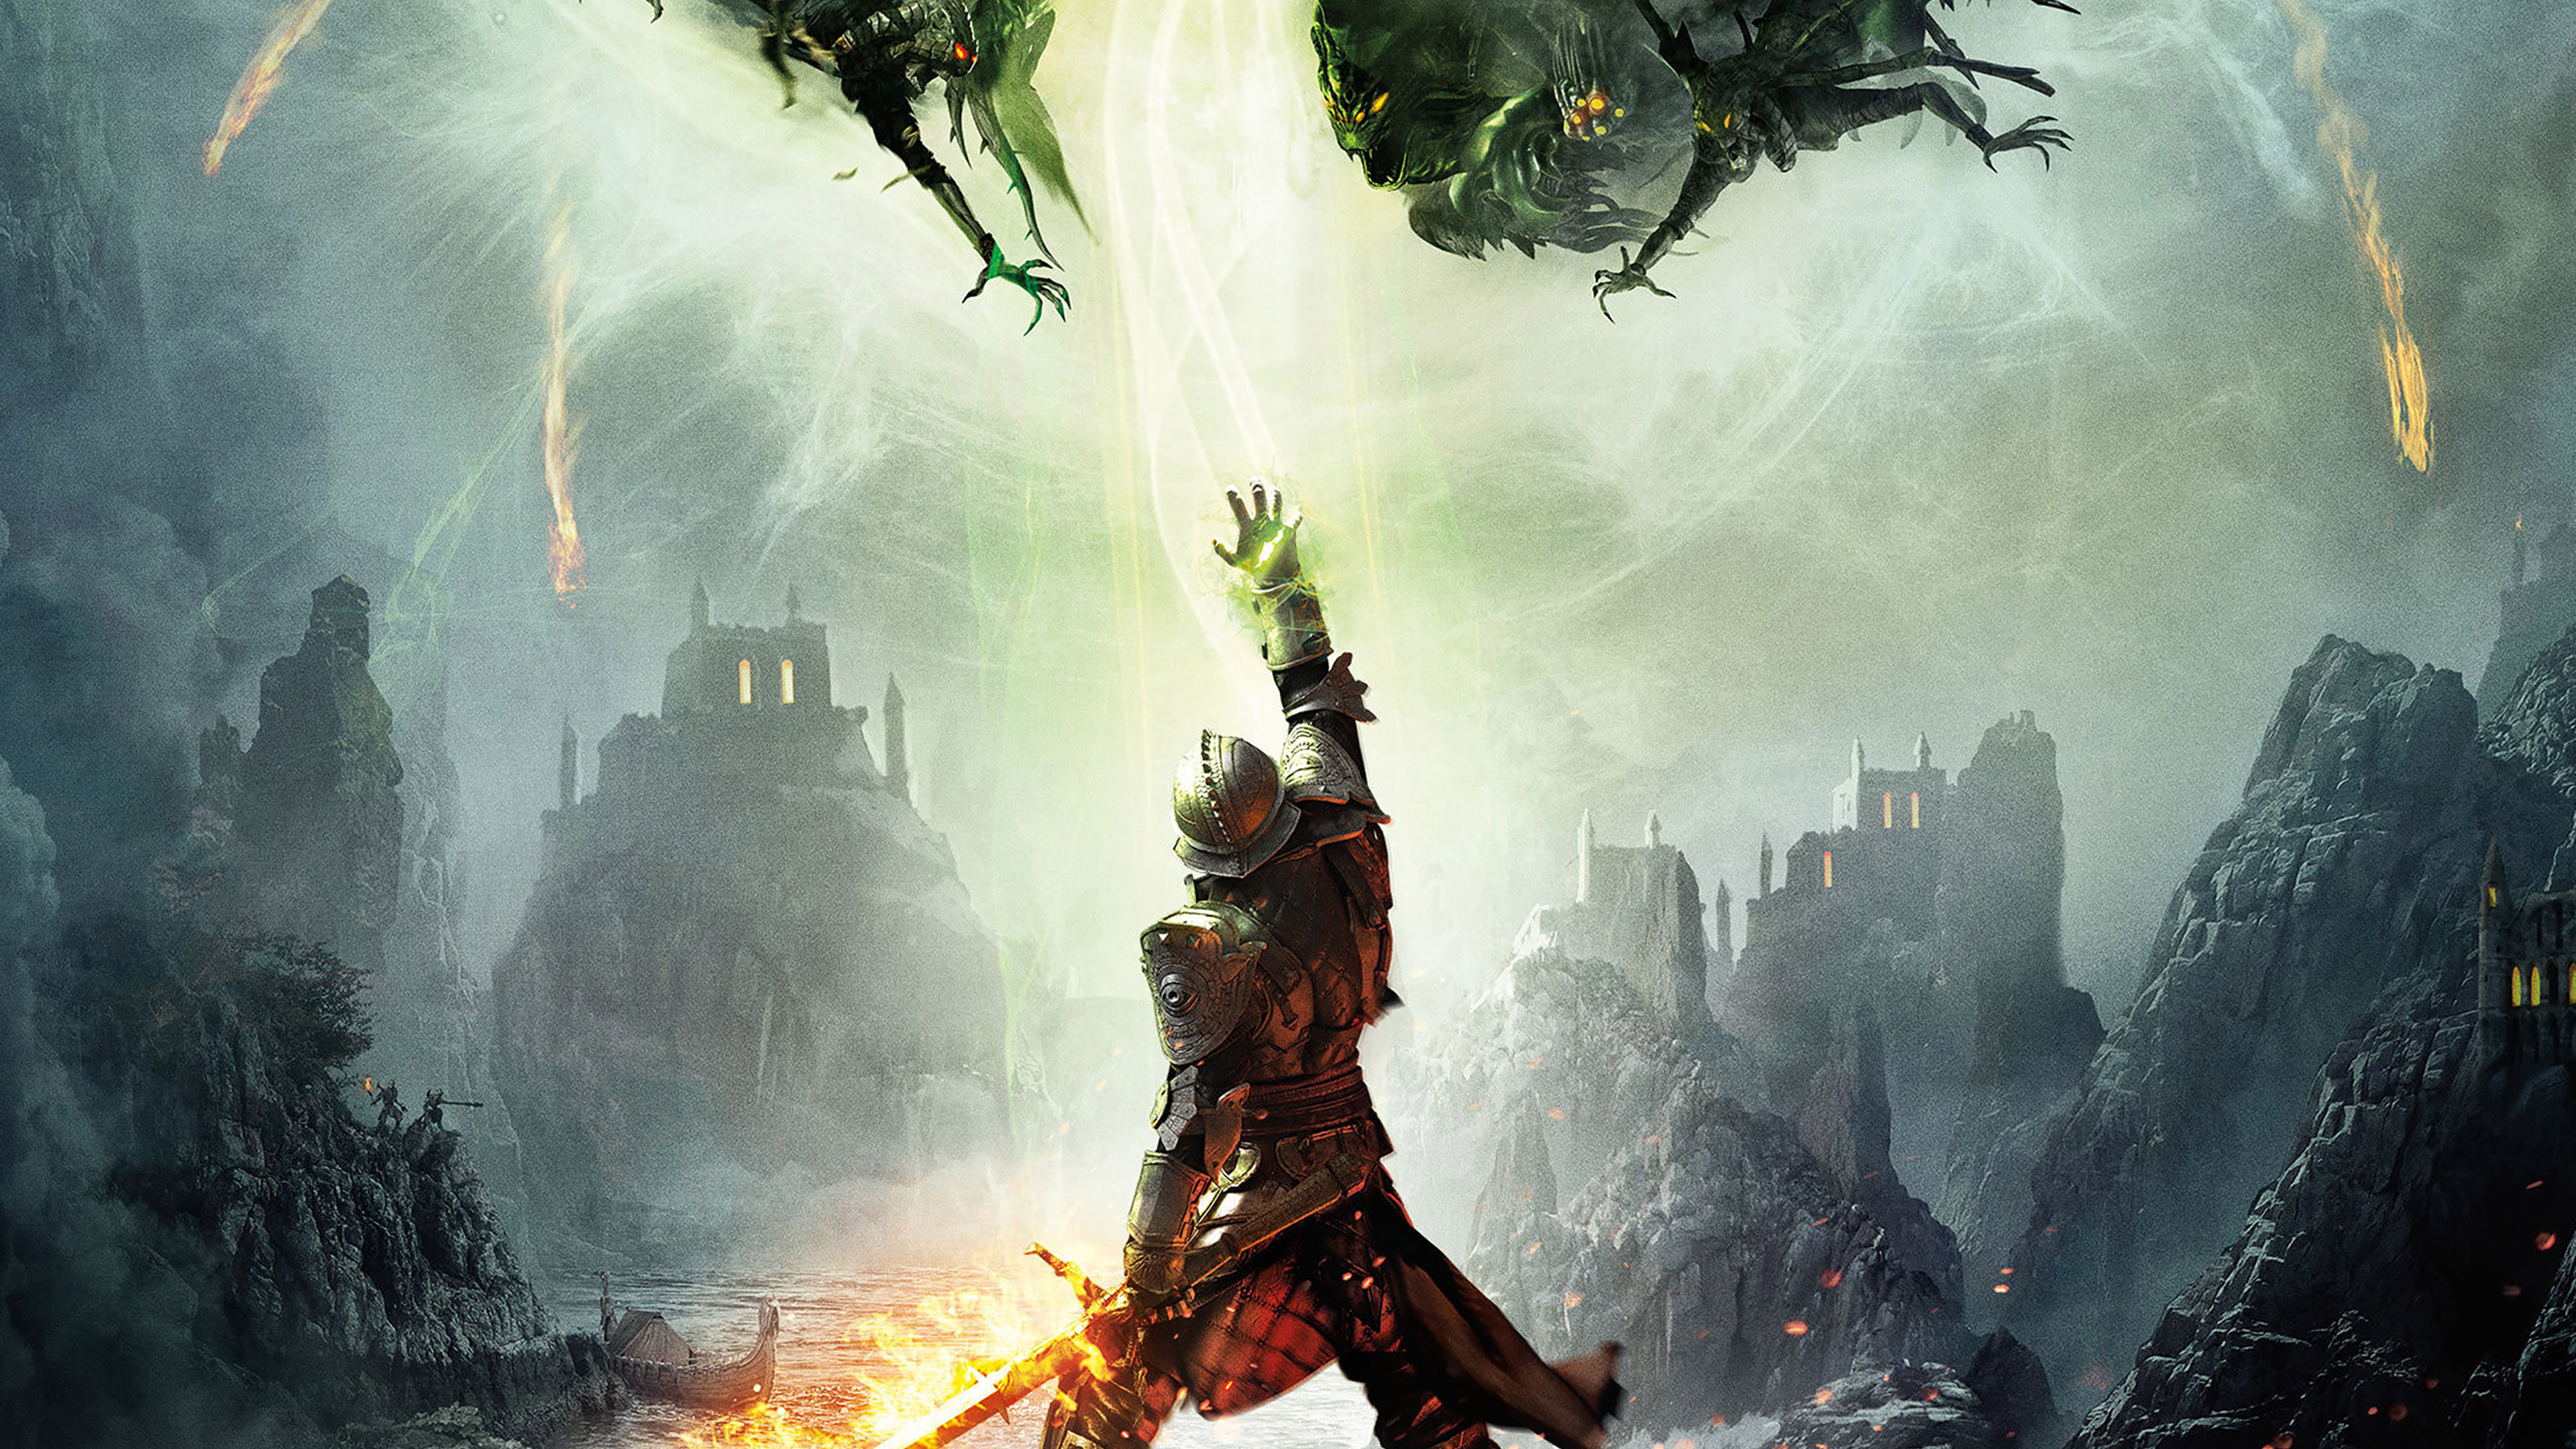 Wallpaper Dark Souls III, RPG game, dragon, fire, warrior 3840x2160 UHD 4K  Picture, Image